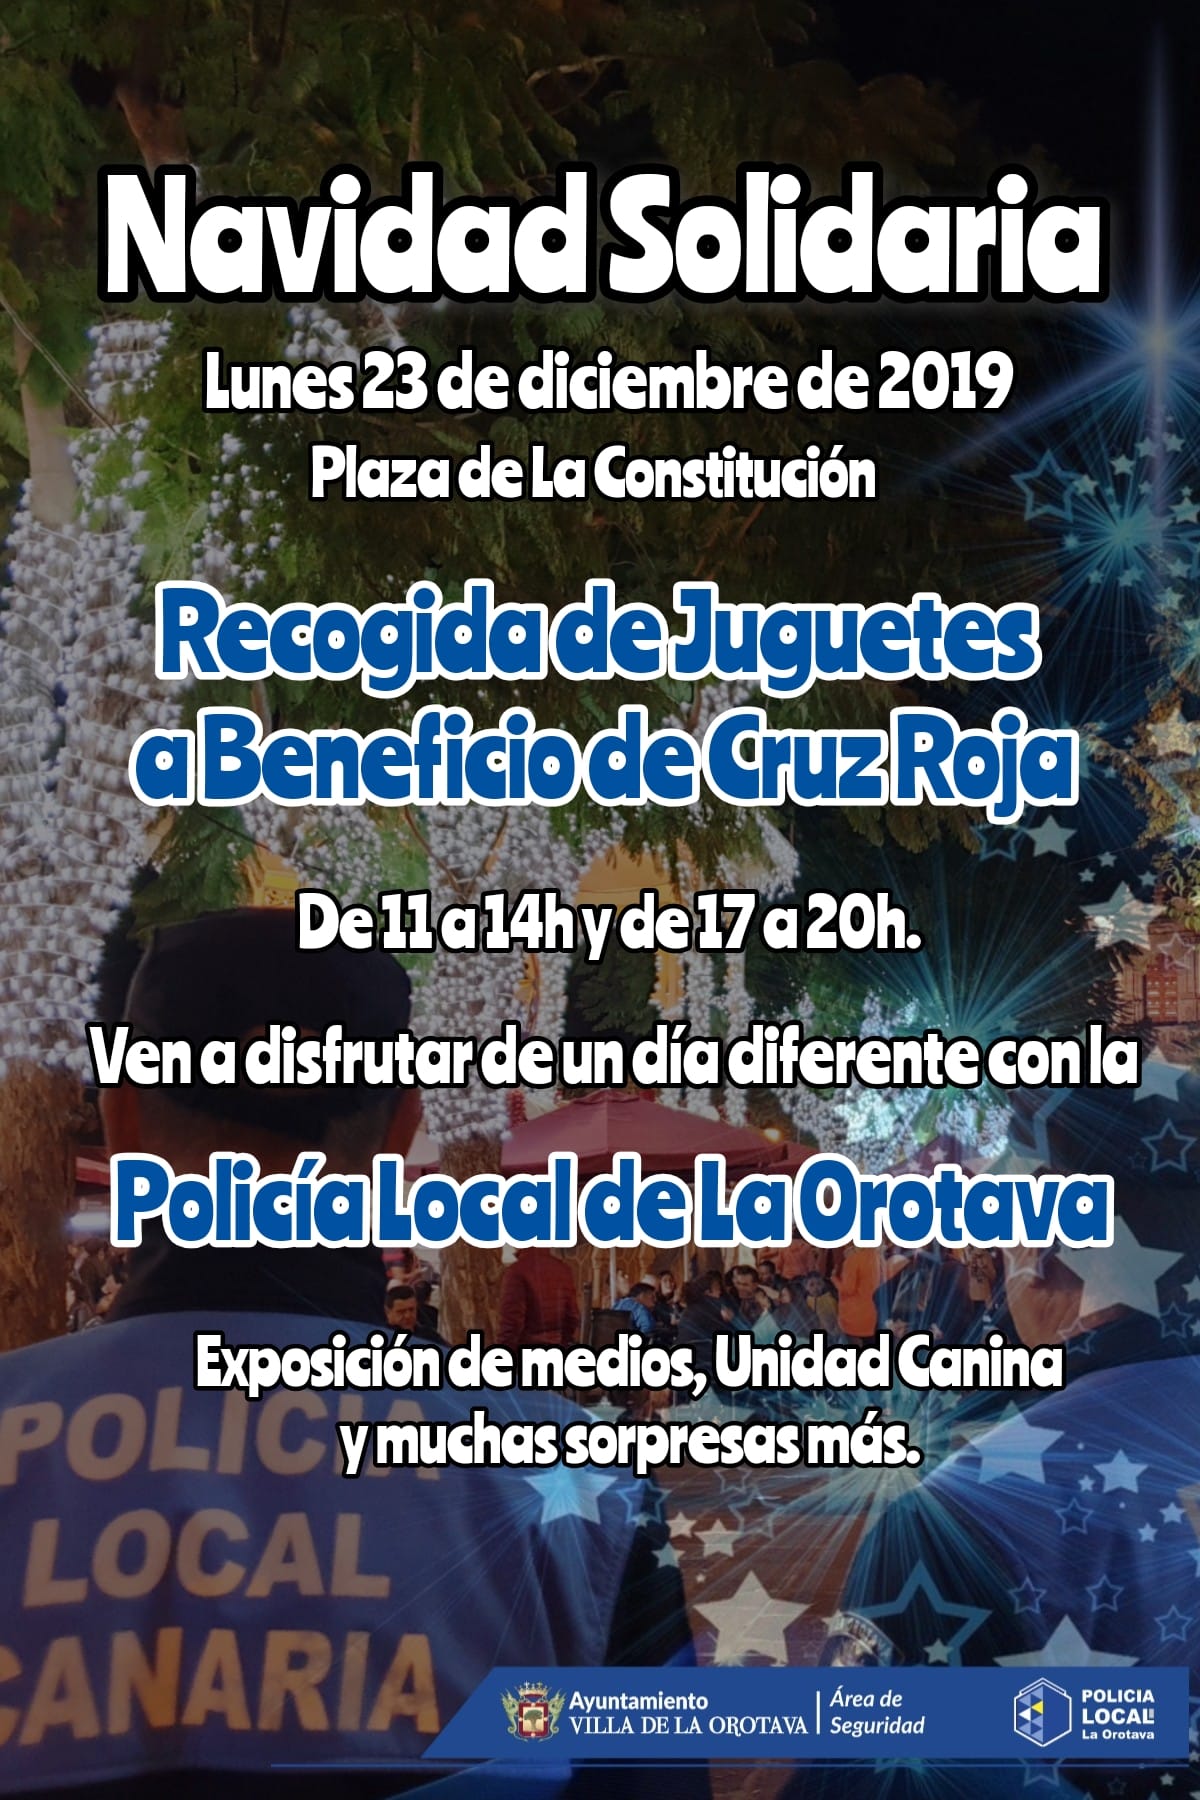 La Policía Local de La Orotava organiza una recogida solidaria de juguetes a favor de Cruz Roja